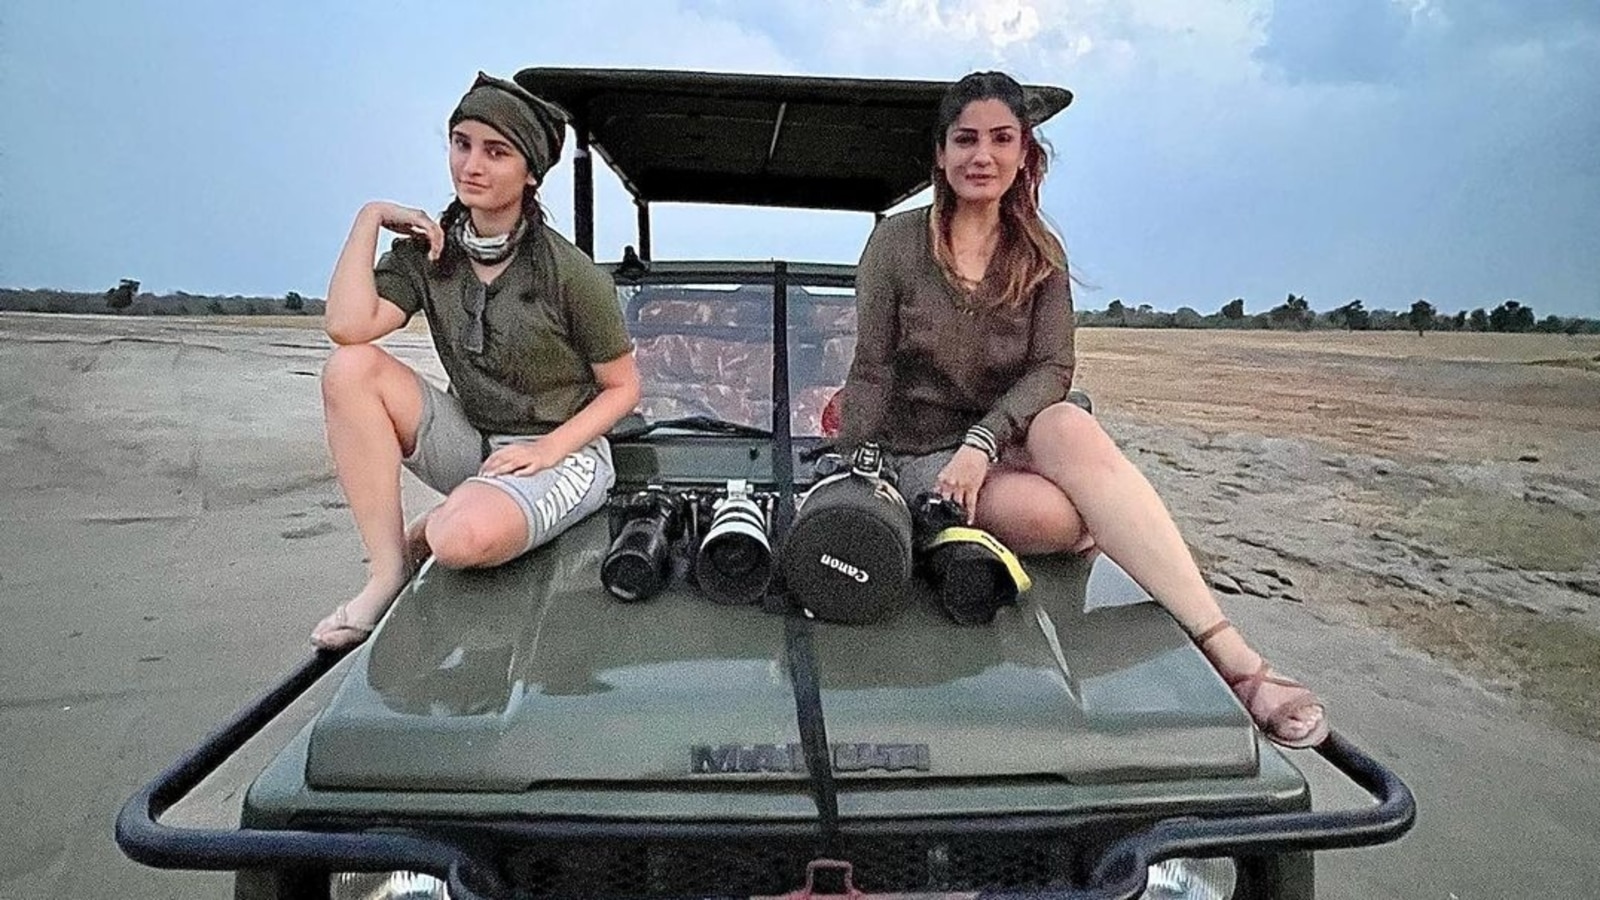 Raveena Xvideo - Raveena Tandon shares pics with daughter Rasha Thadani from wildlife safari  trip | Bollywood - Hindustan Times